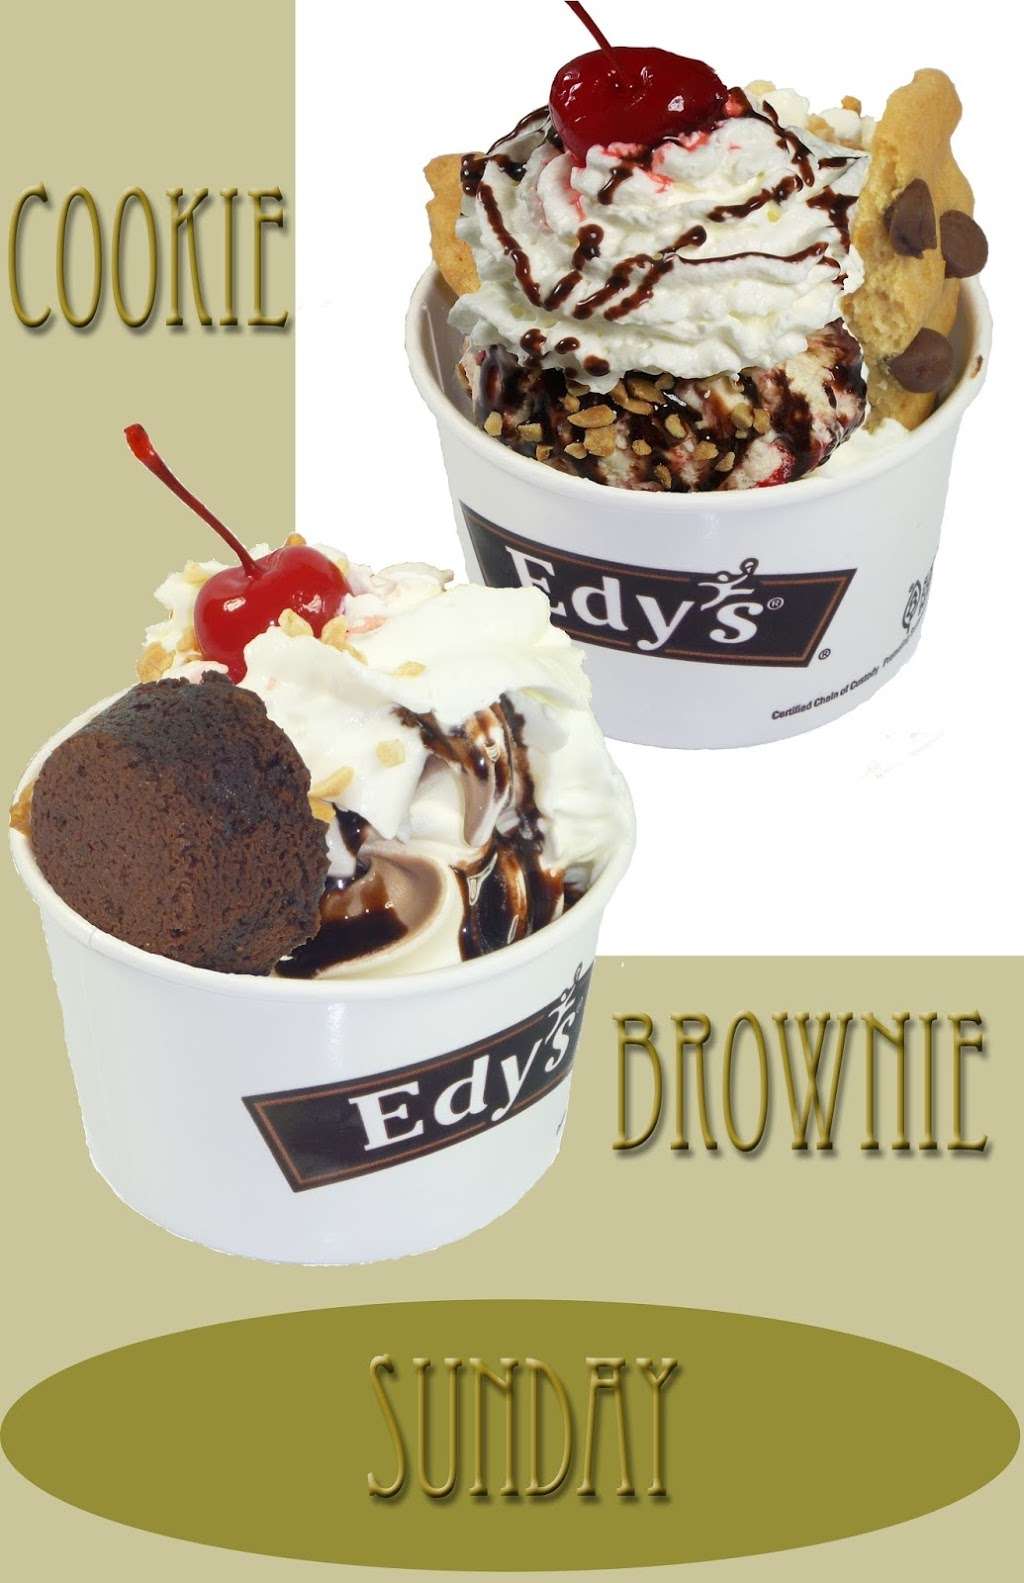 Edys Ice Cream | 600 N Surf Rd, Hollywood, FL 33019 | Phone: (954) 927-8593